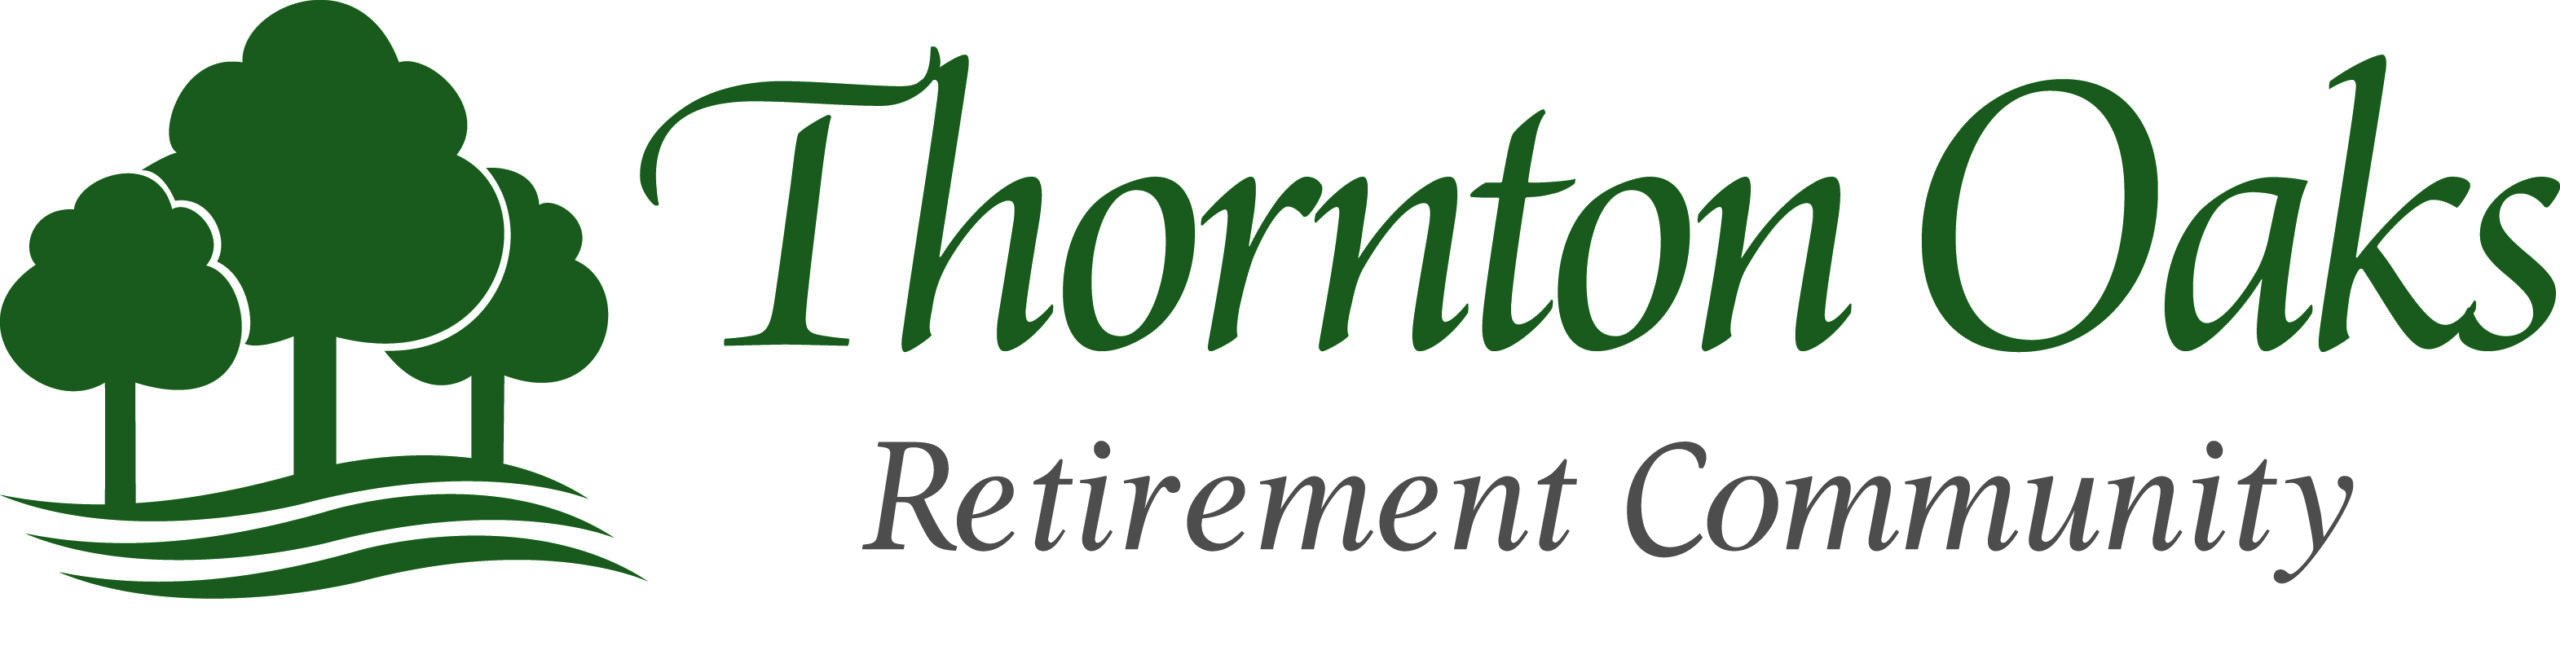 Thornton Oaks Logo